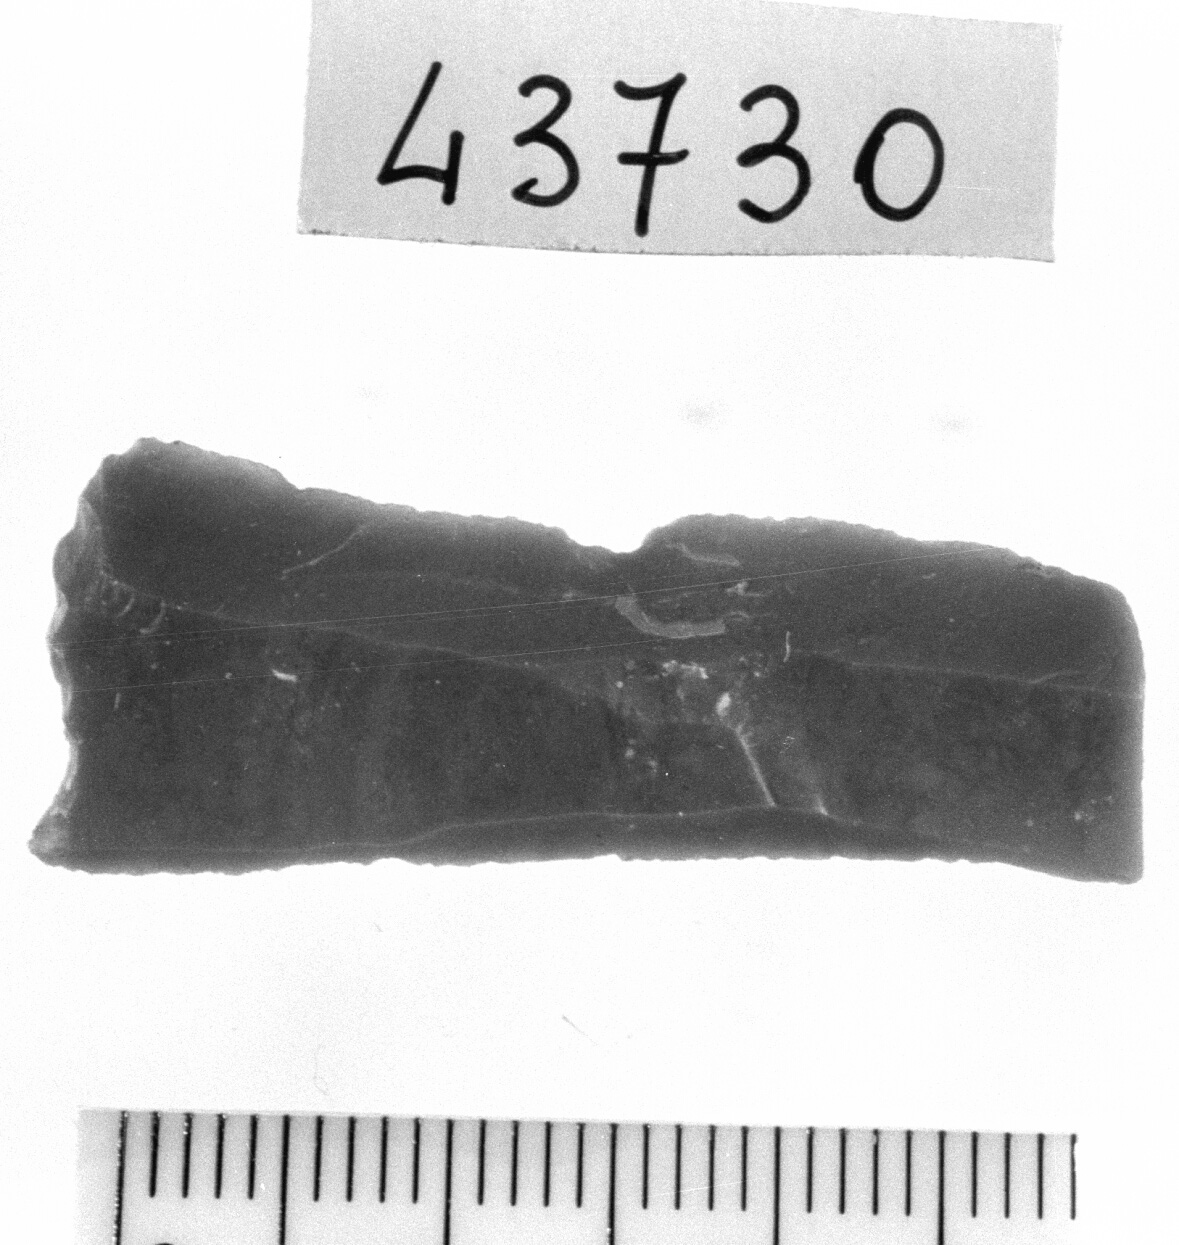 troncatura normale concava - Epigravettiano (Paleolitico superiore)